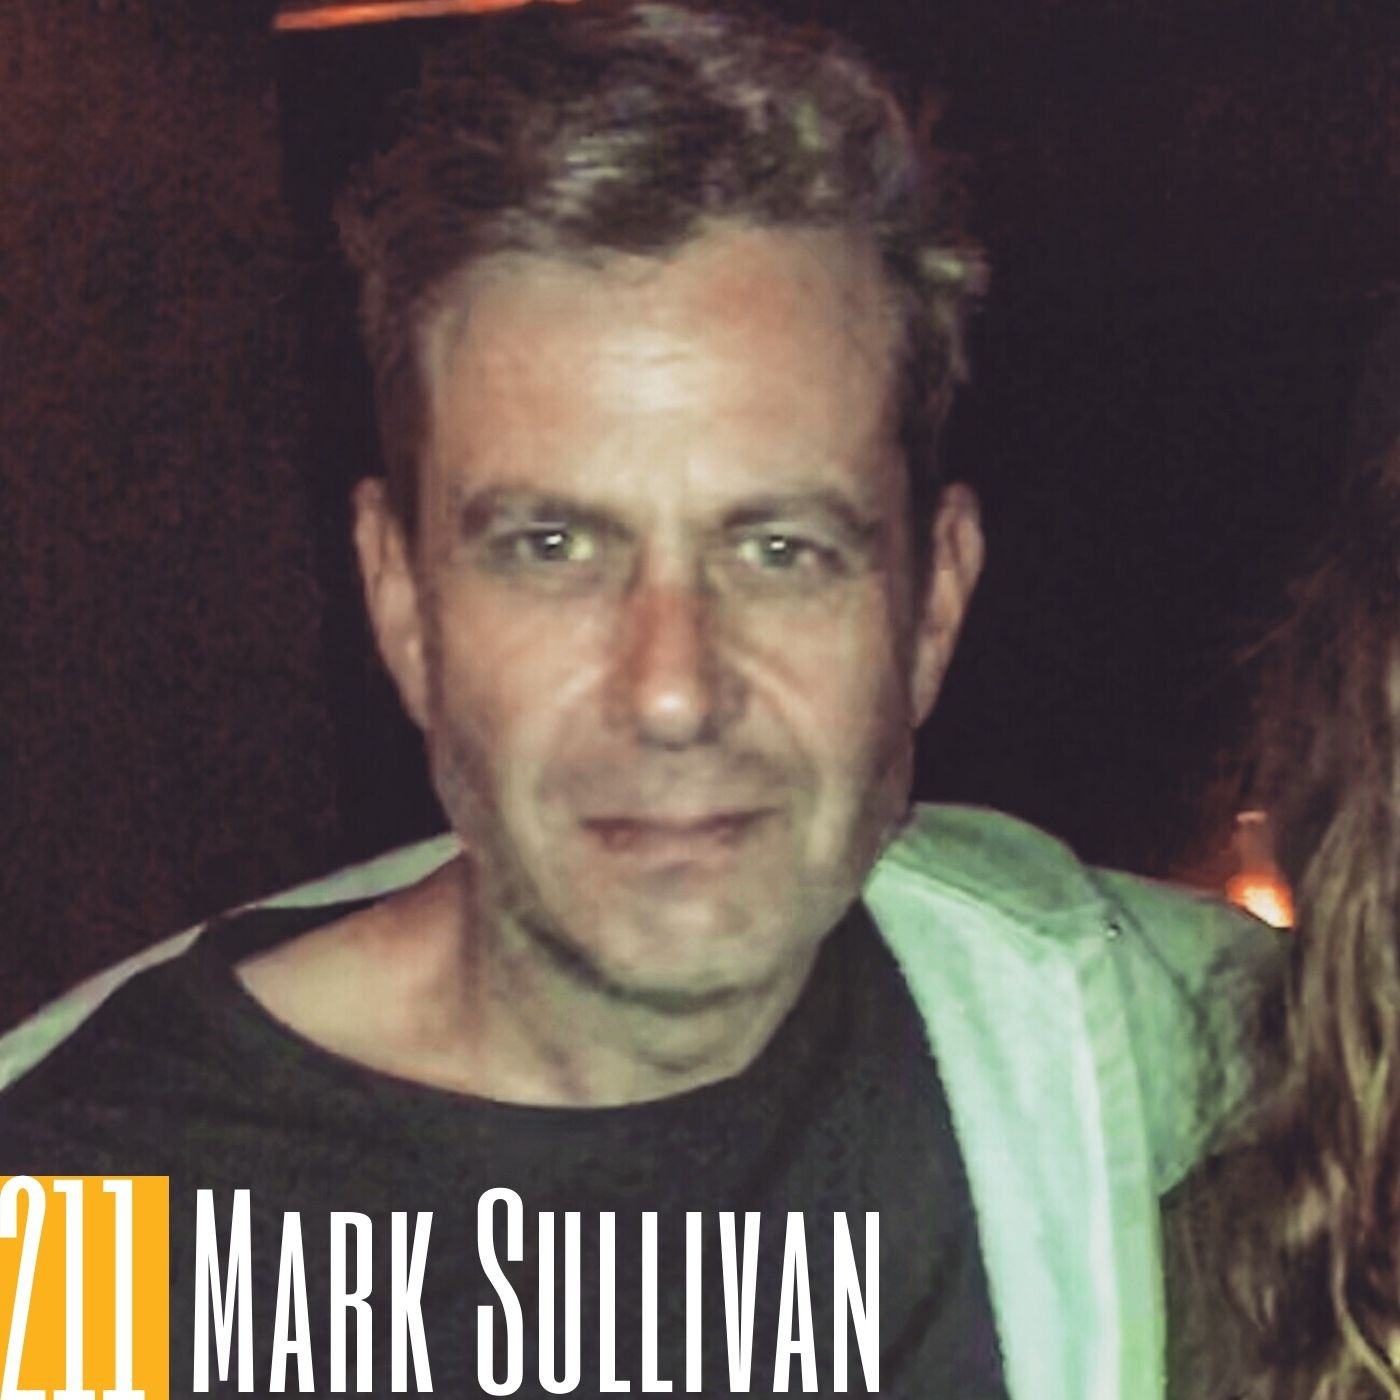 211 Mark Sullivan - From Snowboarder to Kaizen Philosopher